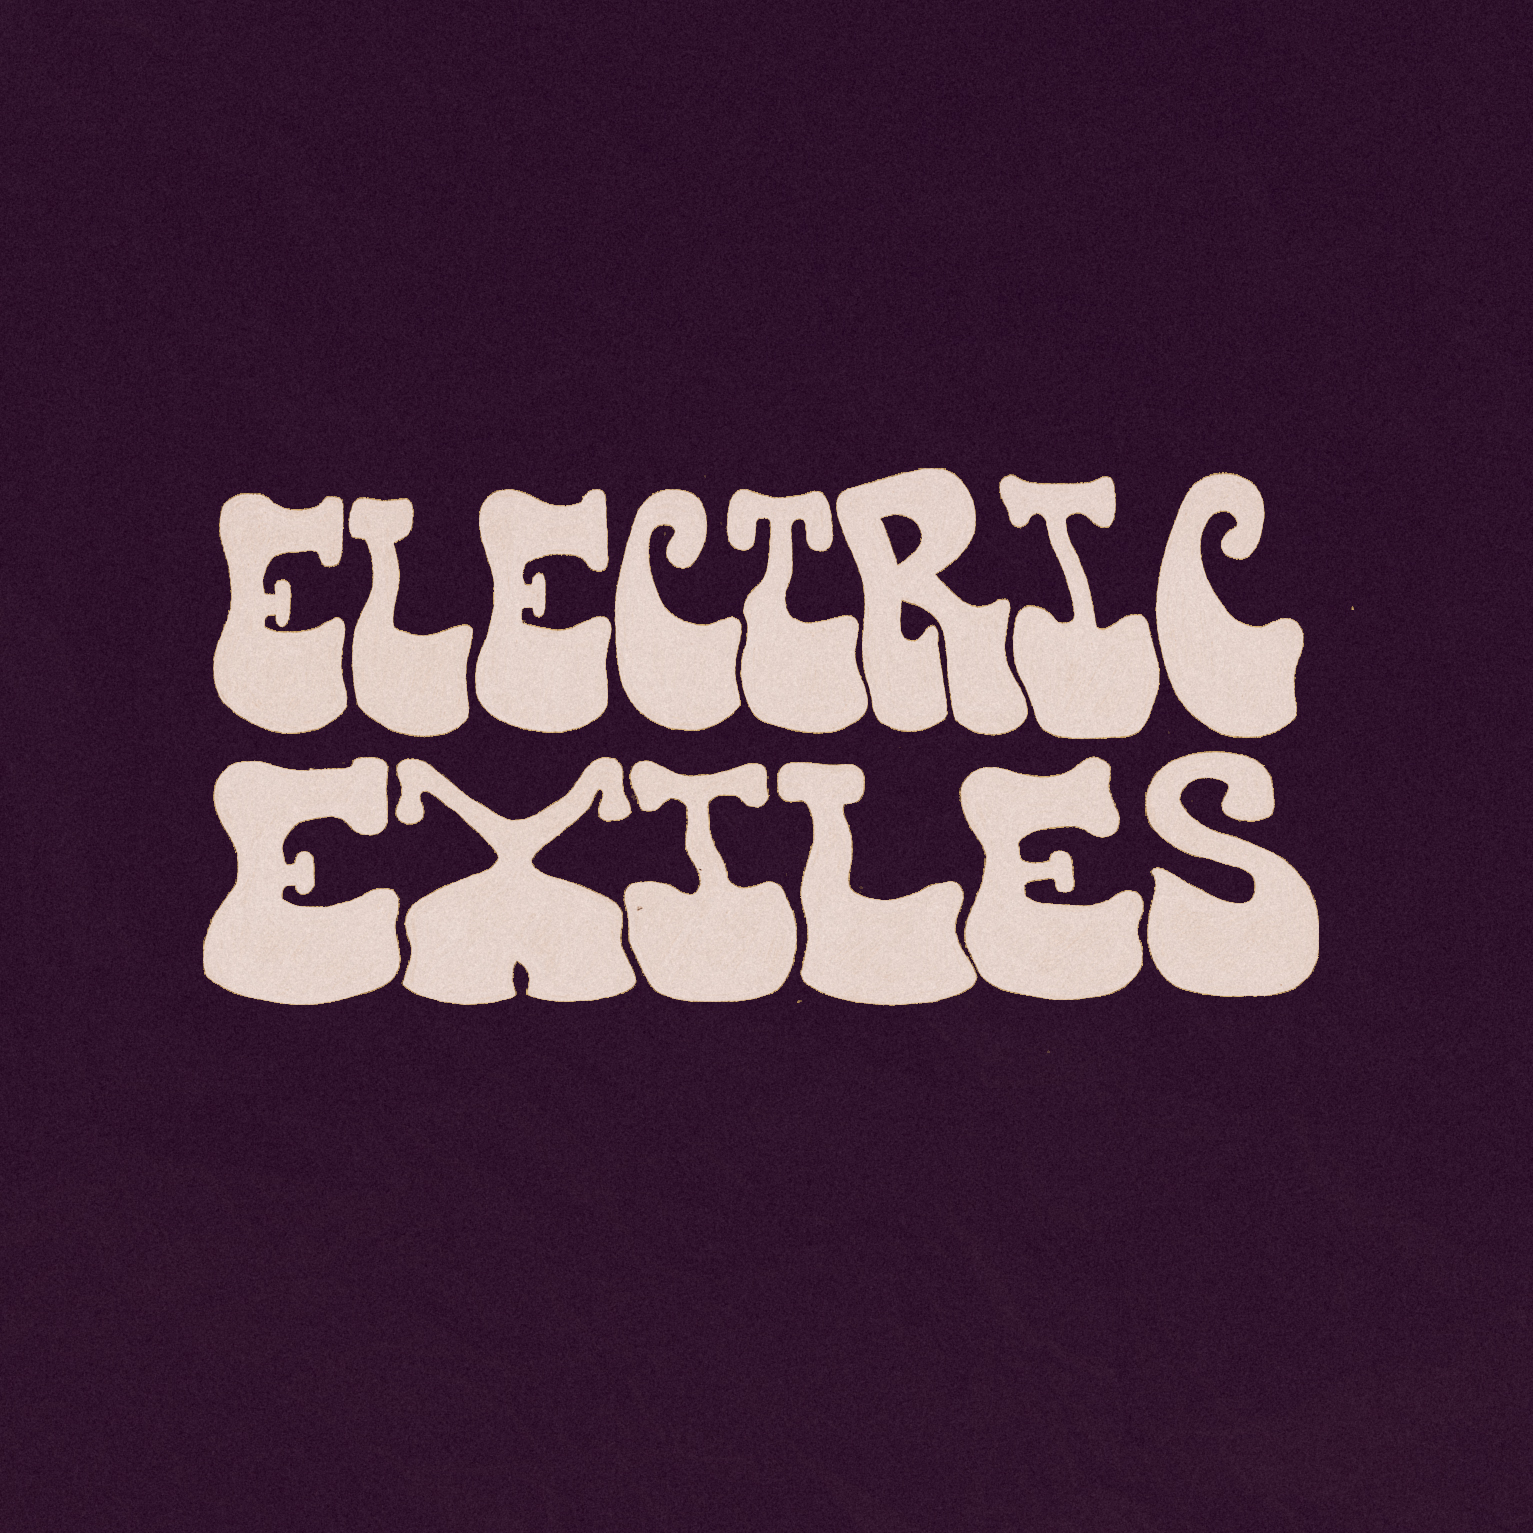 Electric Exiles